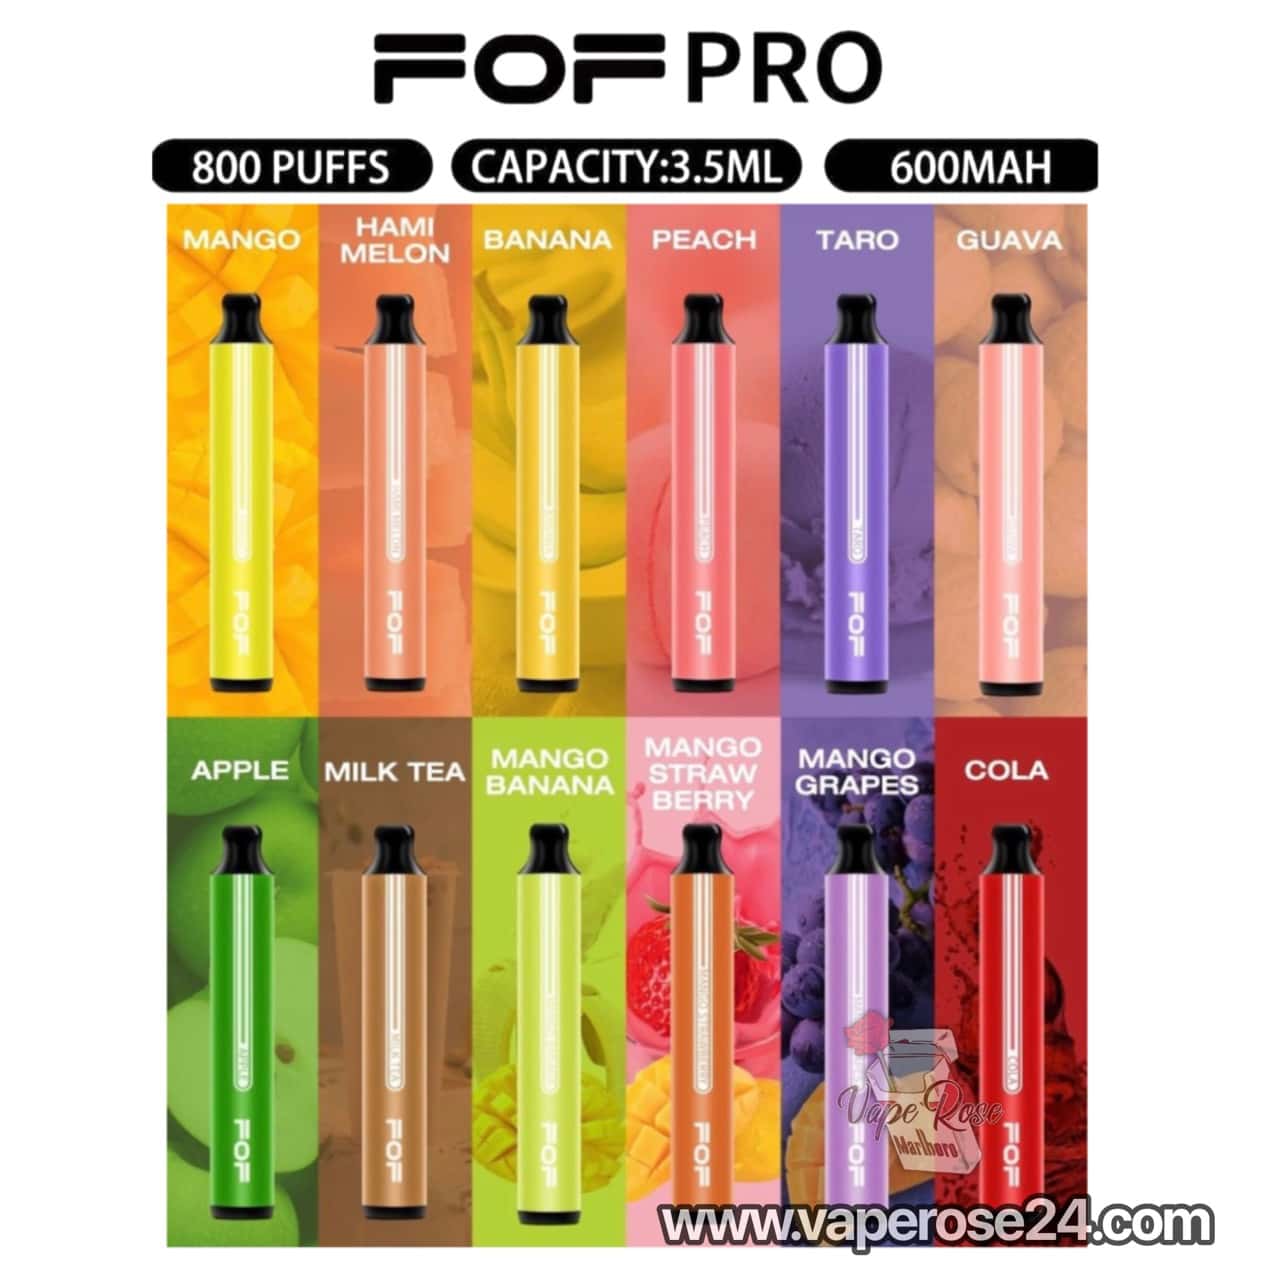 FOF PRO STICK (ใช้แล้วทิ้ง สูบได้800+ครั้ง)